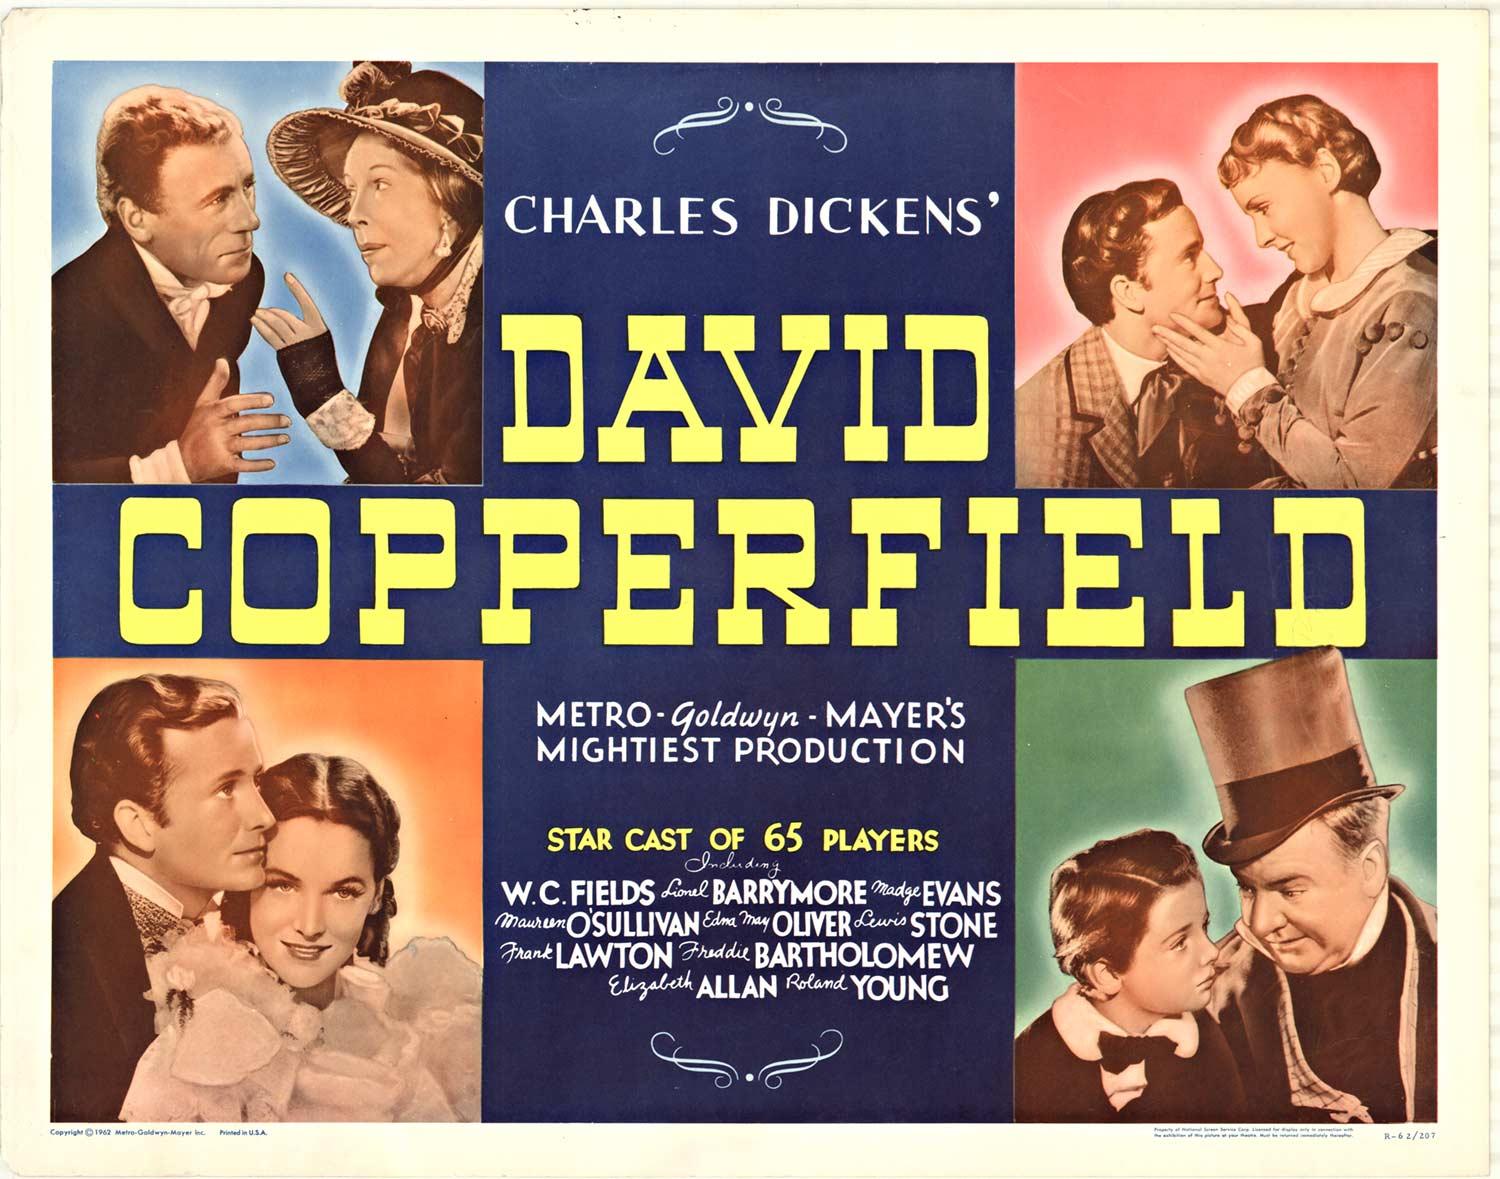 Unknown Portrait Print - Original Charles Dickens' David Copperfield US movie poster  half-sheet